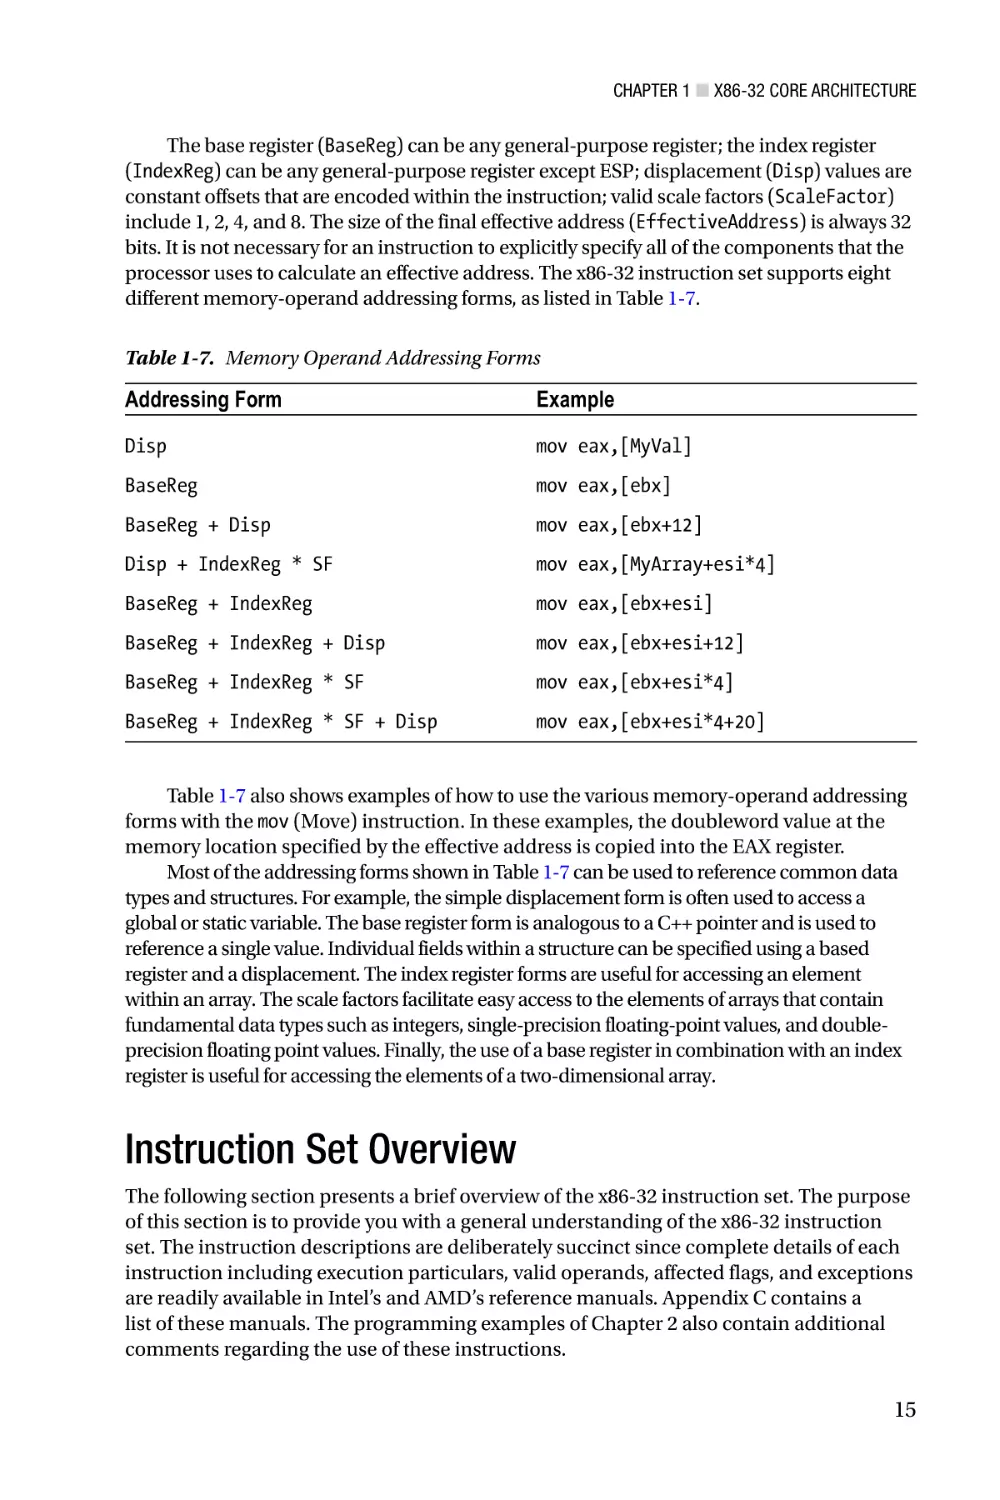 Instruction Set Overview